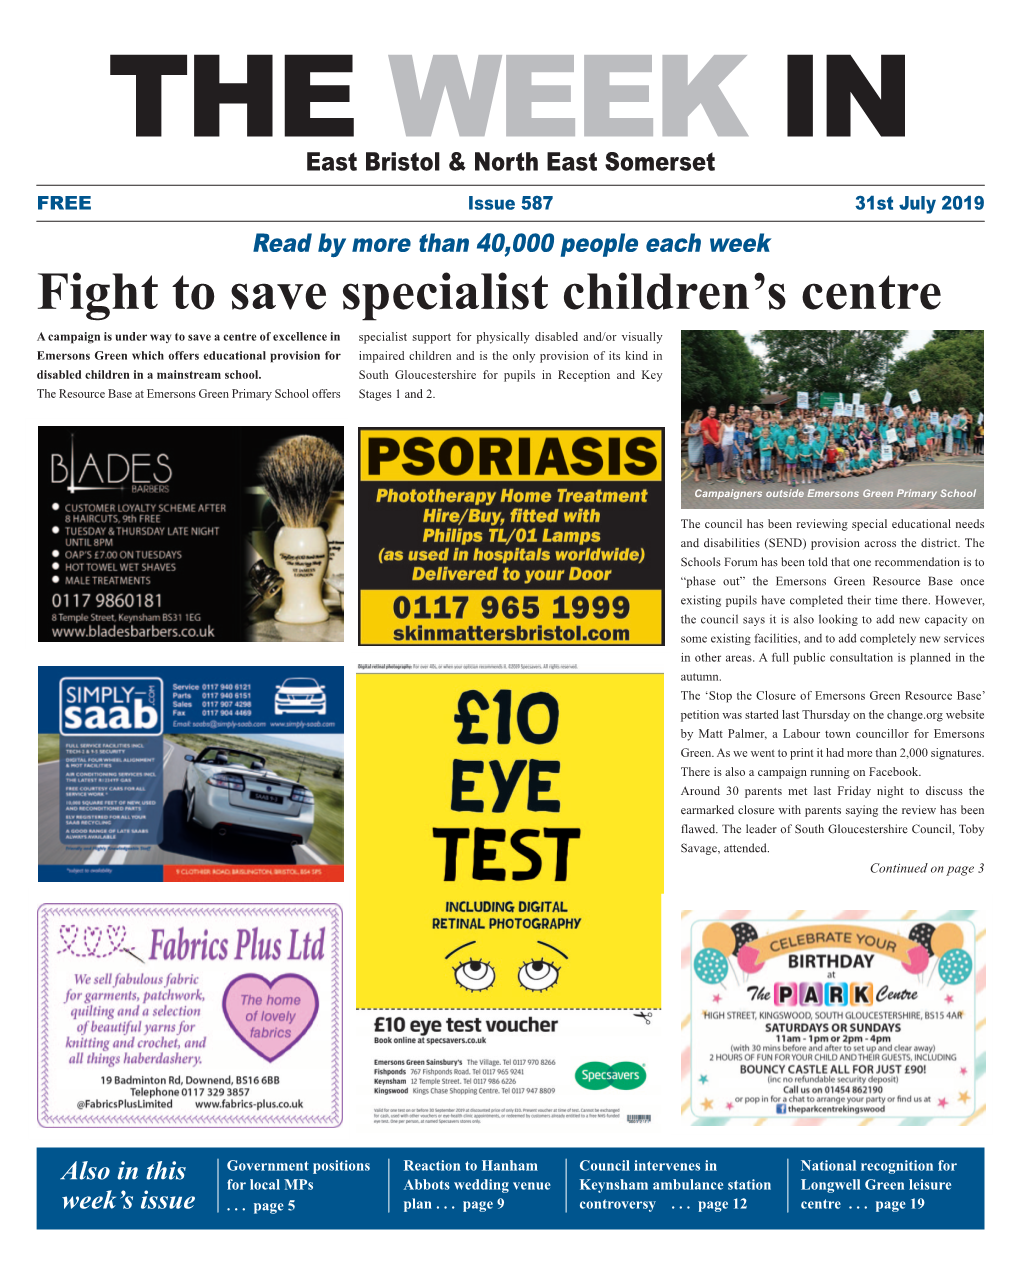 Fight to Save Specialist Children's Centre